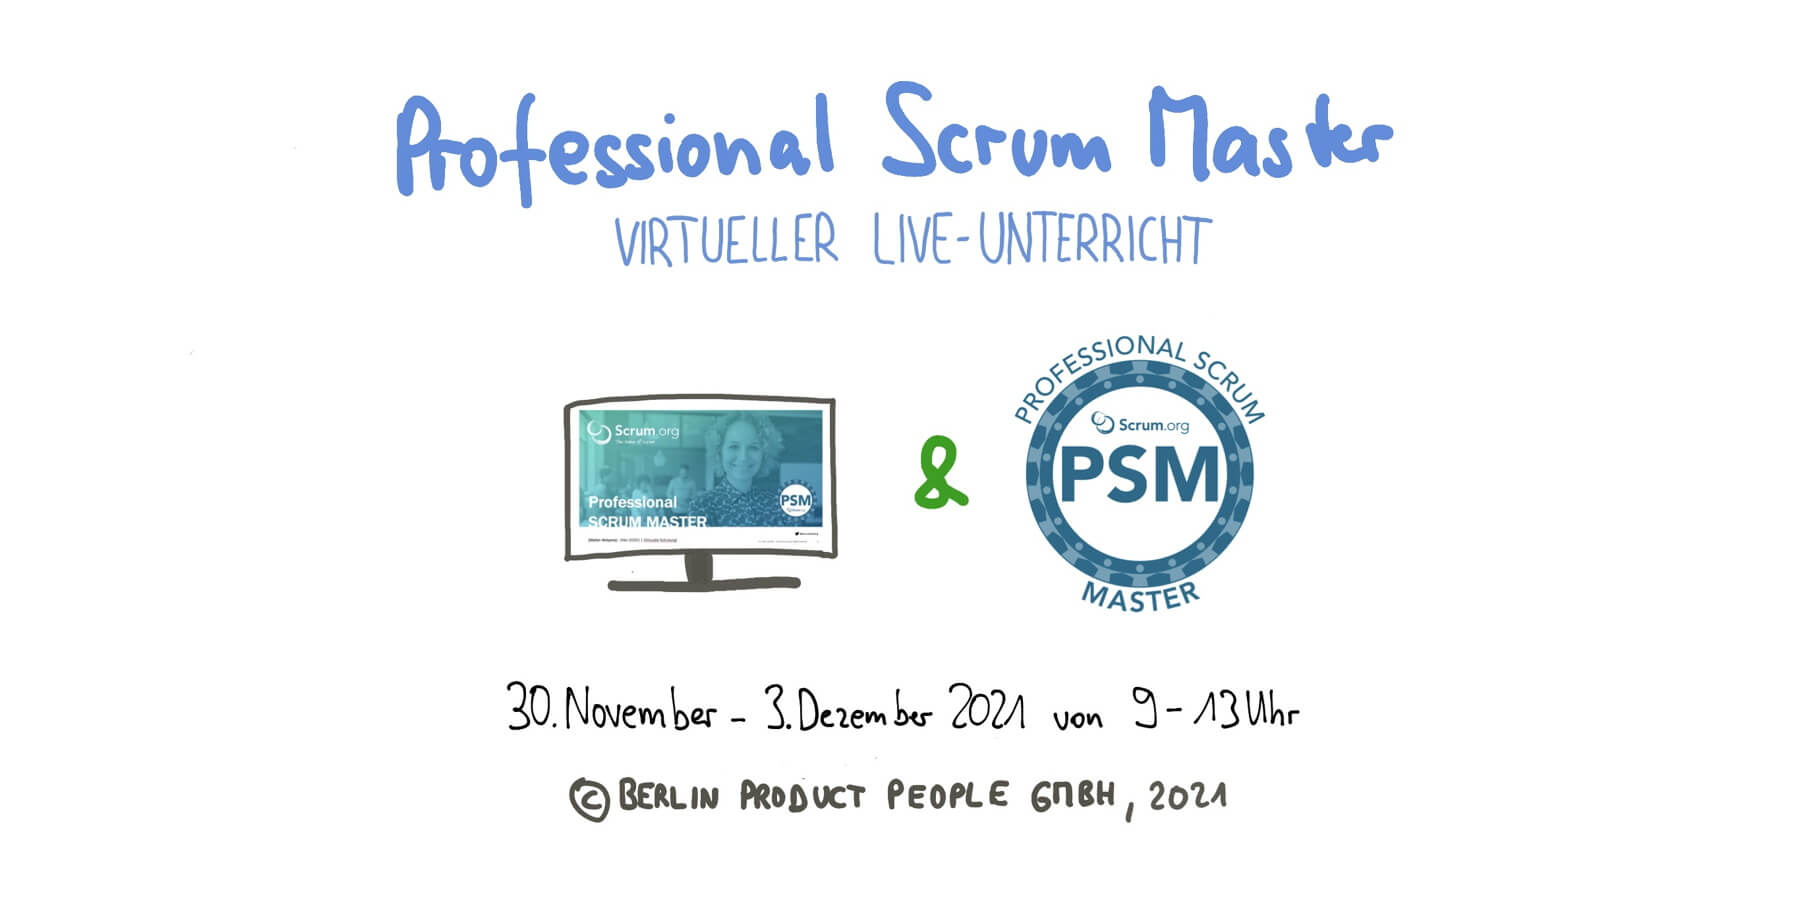 Professional Scrum Master Onlineschulung mit PSM I Zertifizierung — 30. November bis 3. Dezember 2021 — Berlin Product People GmbH